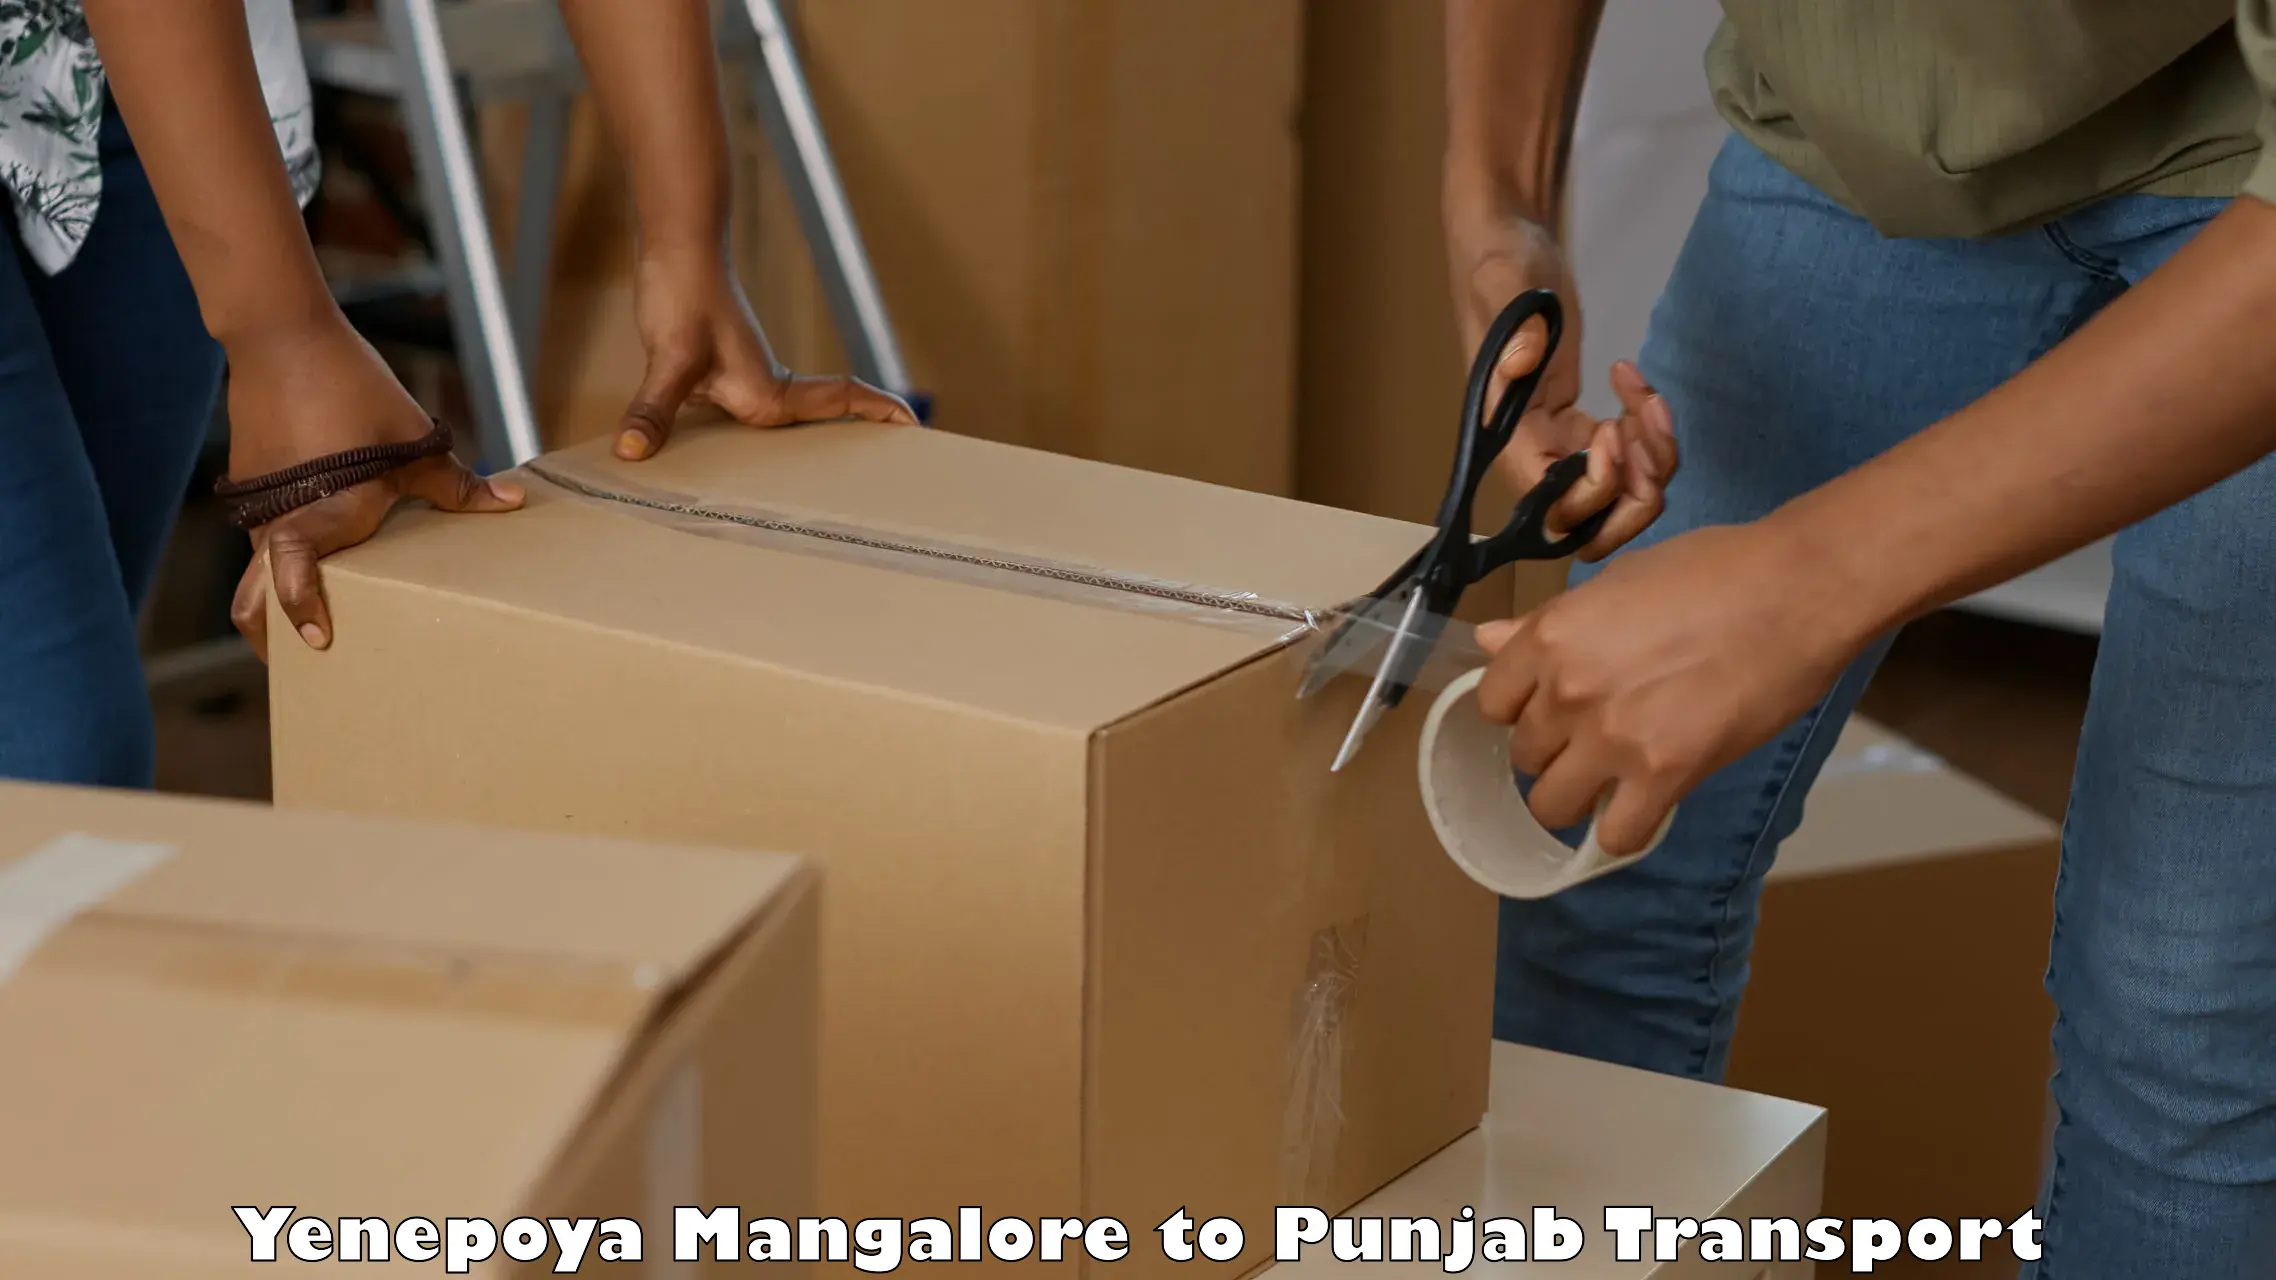 Bike shipping service Yenepoya Mangalore to Mohali